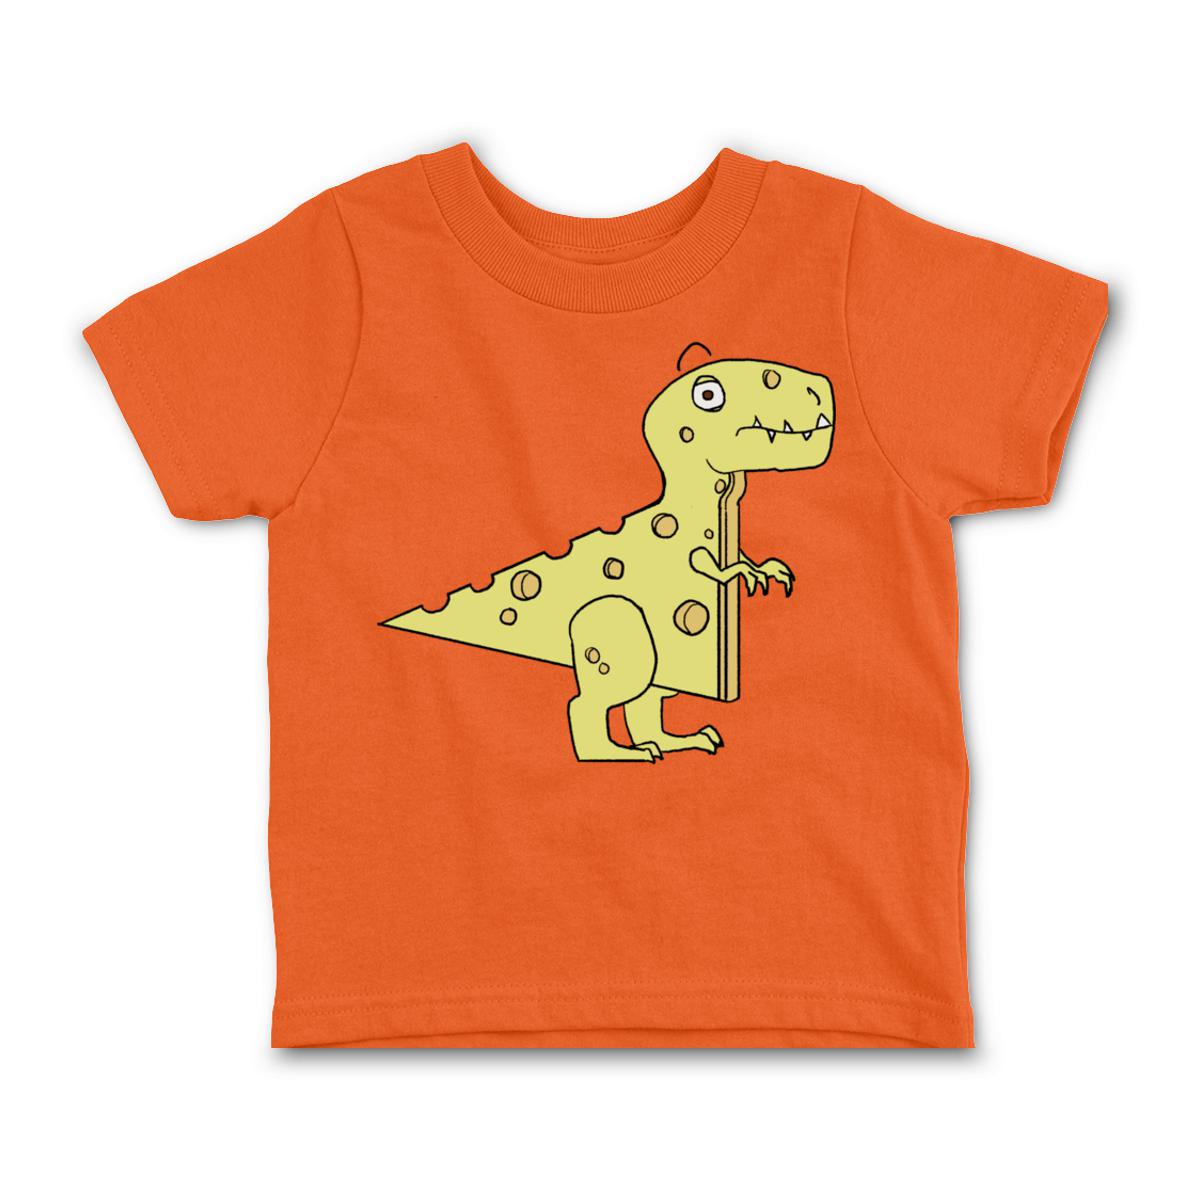 Cheeseosaurus Rex Toddler Tee 56T orange